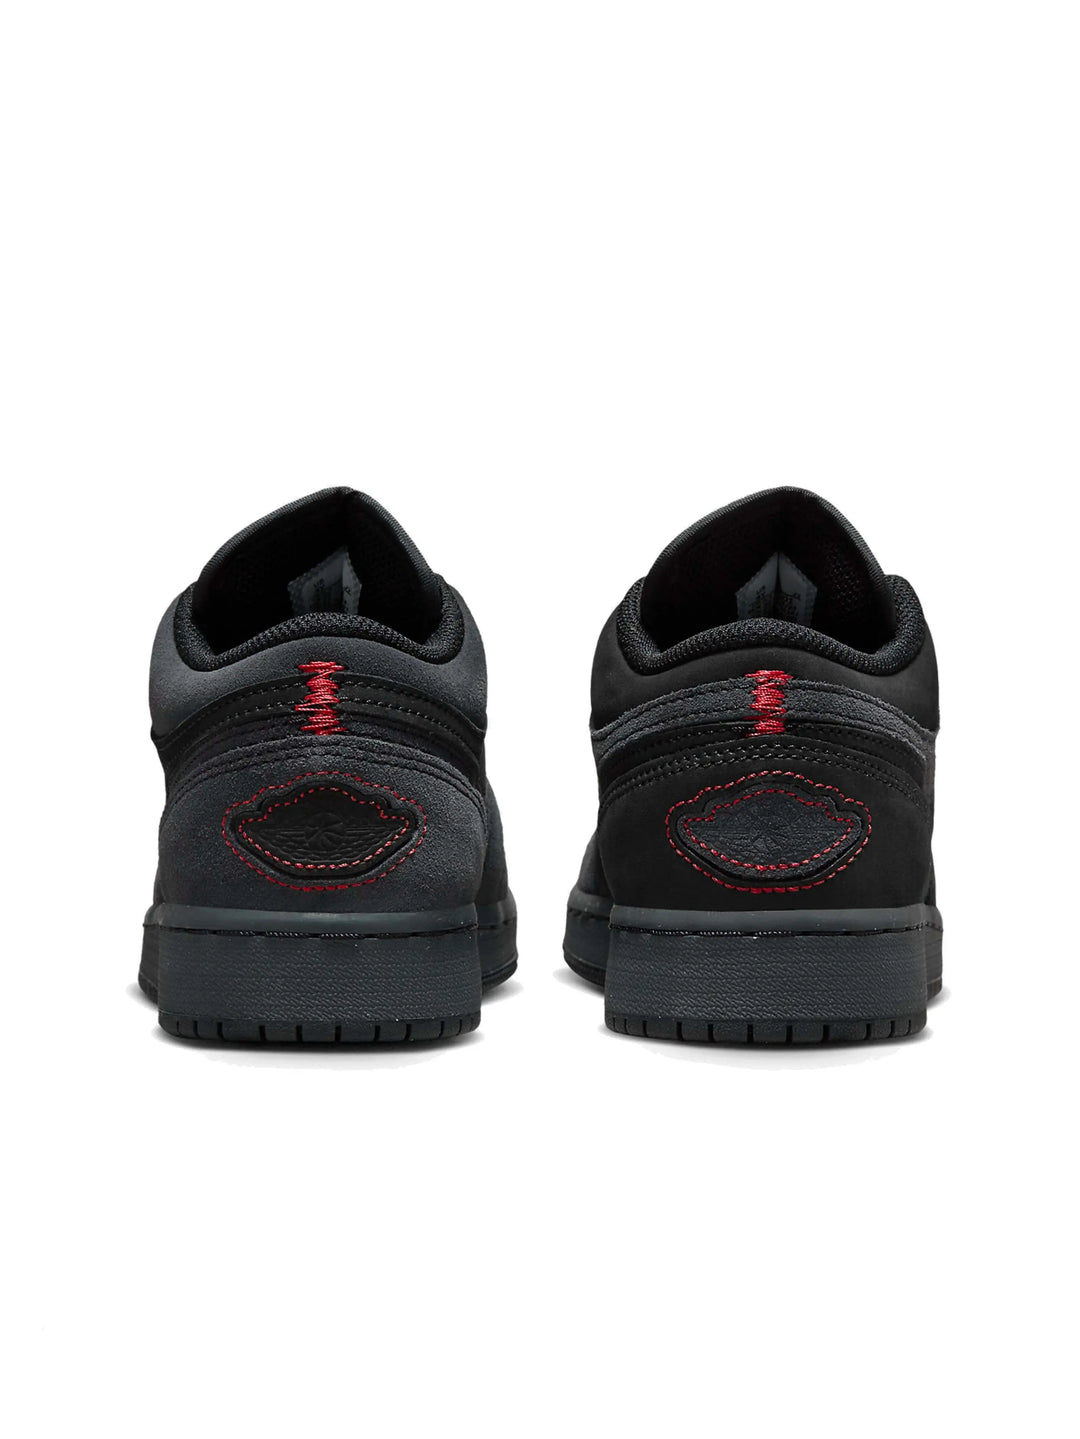 Nike Air Jordan 1 Low SE Craft GS 'Dark Smoke Red' (GS) in Melbourne, Australia - Prior